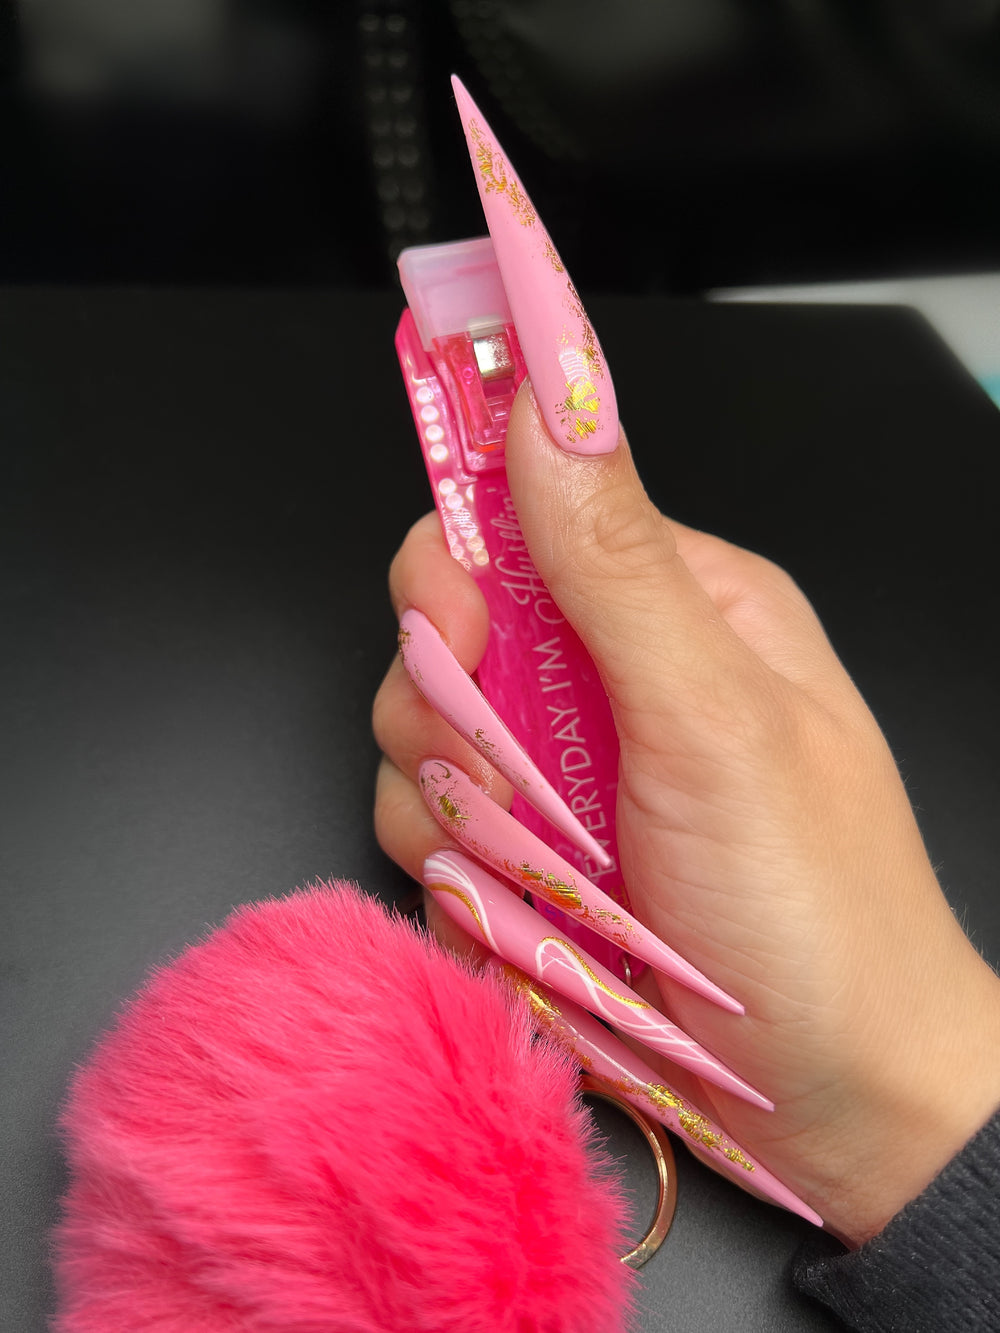 Nabulous Card Grabber for Long Nails | Credit Card Puller | ATM Debit Card Clip Keychain with Pom Pom-Sanitary Card Grabber